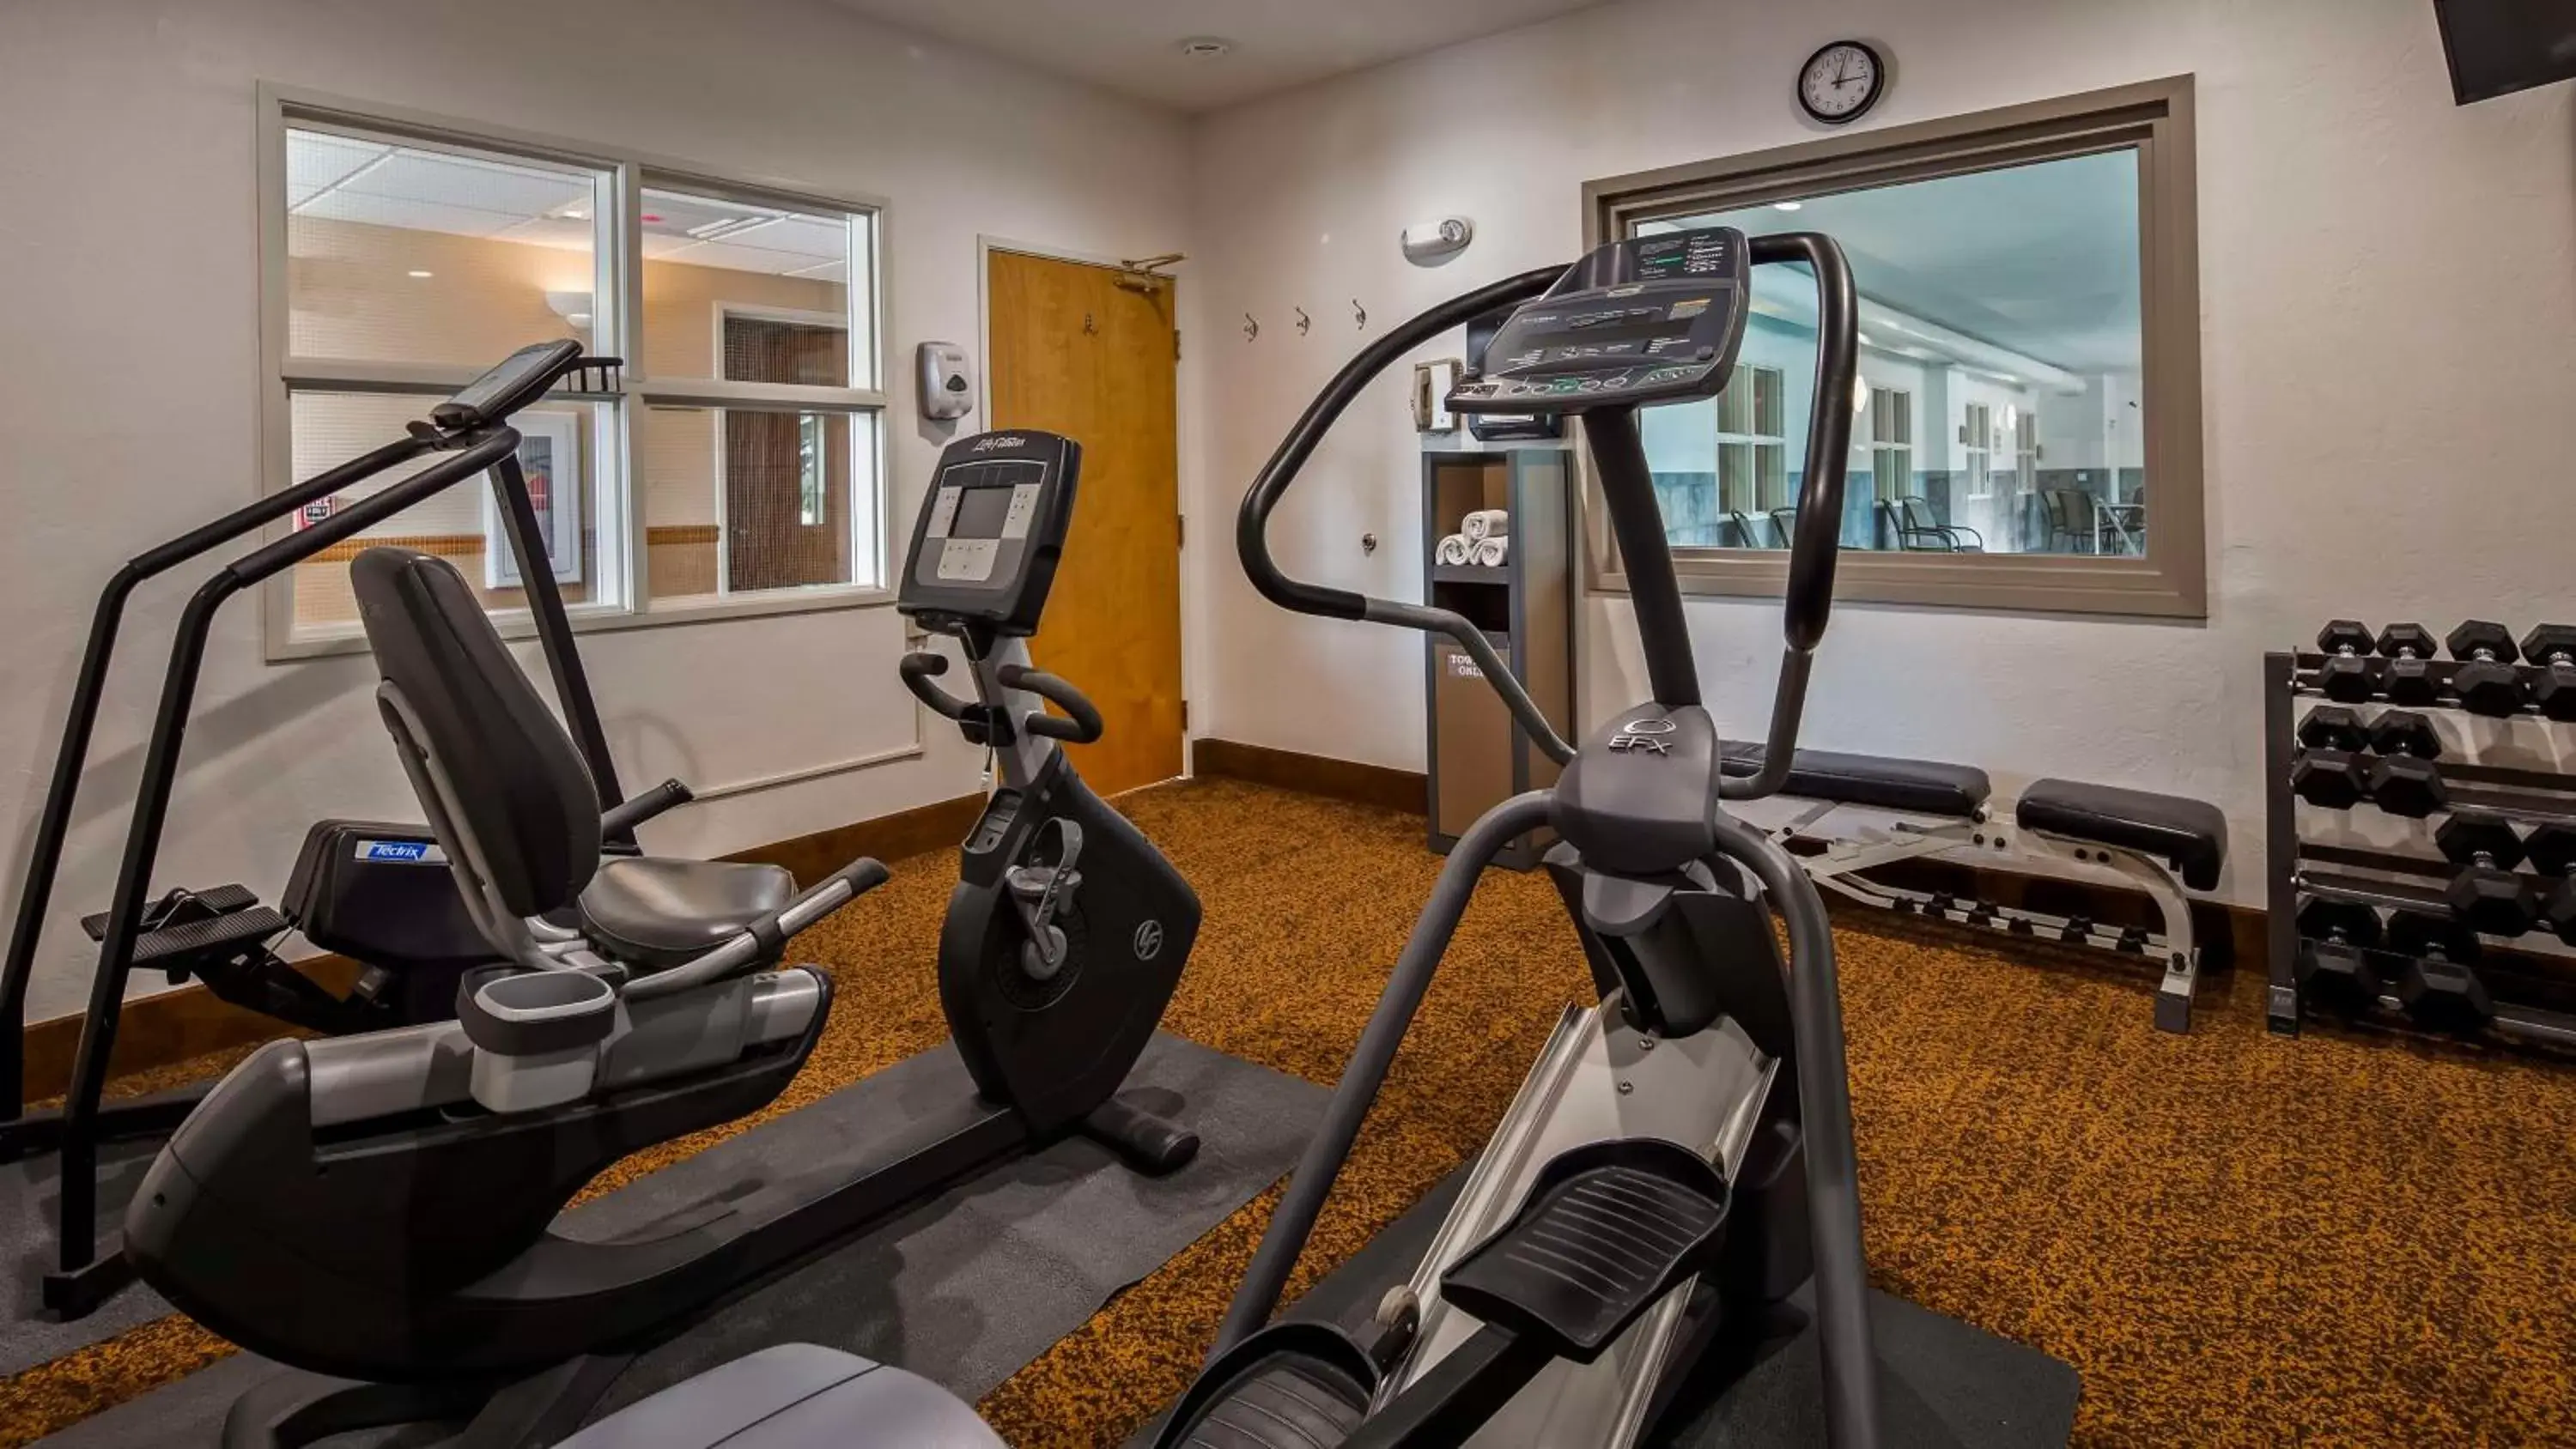 Fitness centre/facilities, Fitness Center/Facilities in Best Western Vista Inn